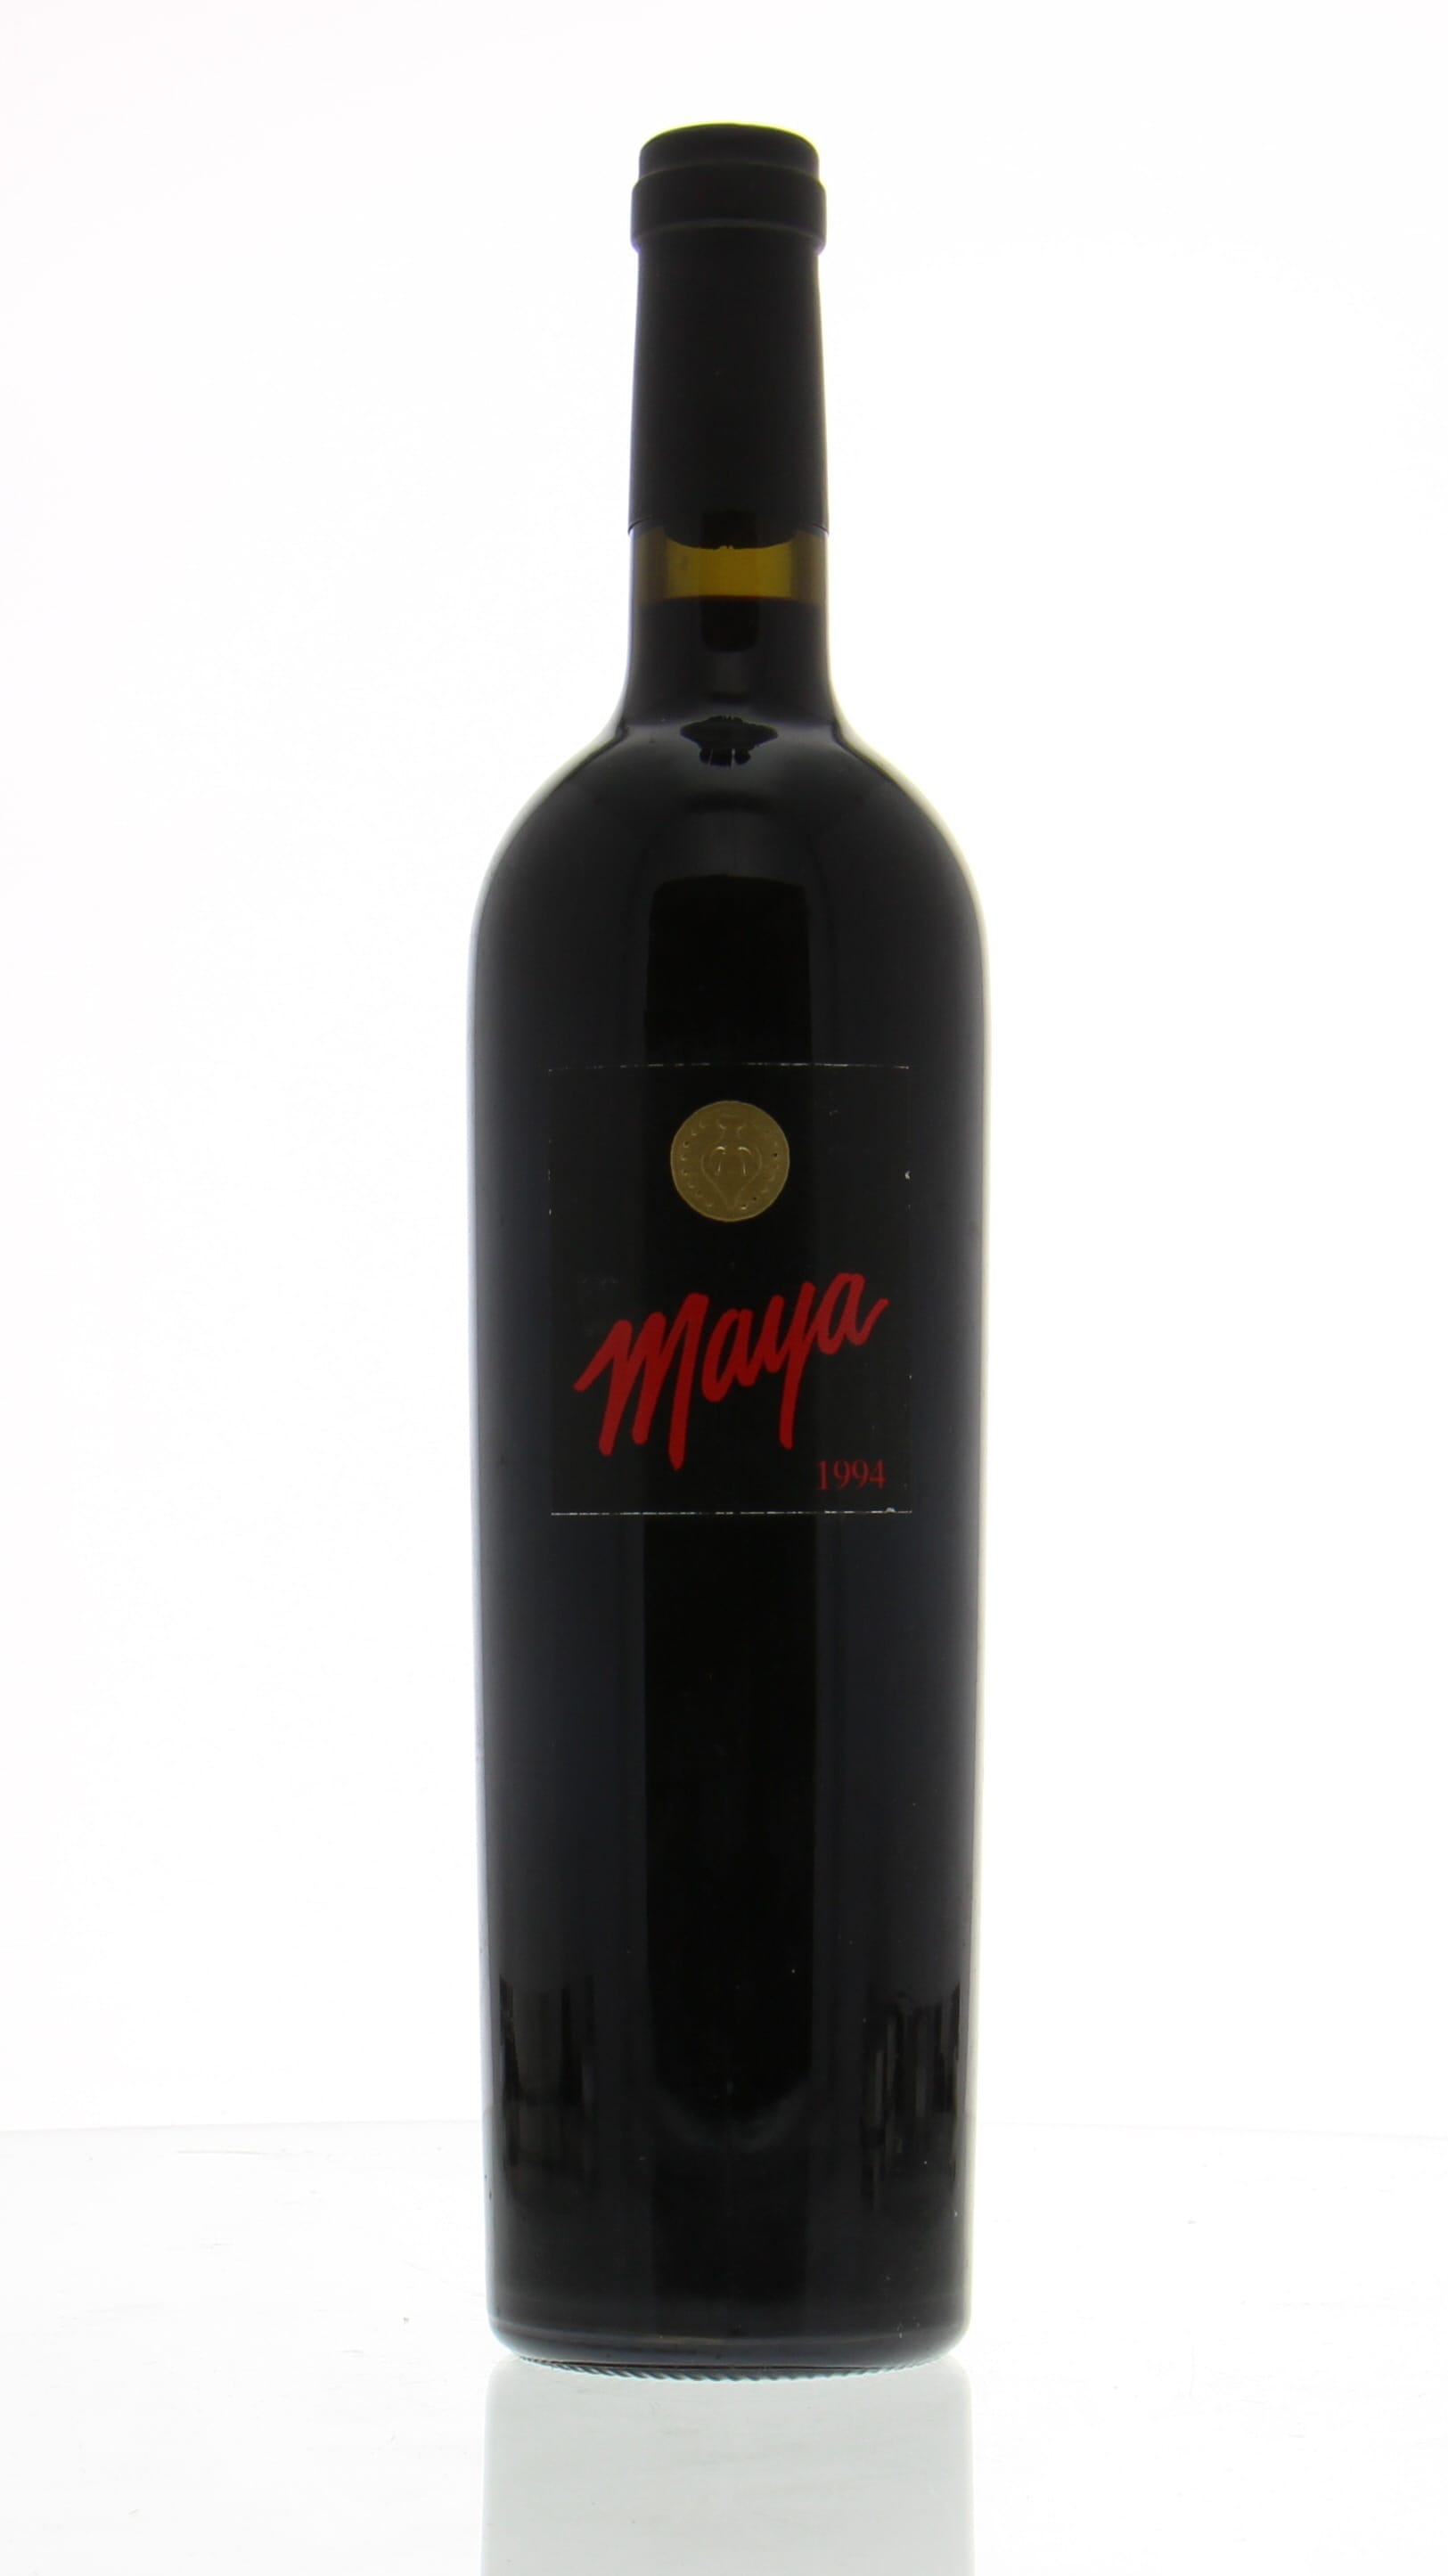 Dalla Valle - Maya Proprietary Red Wine 1994